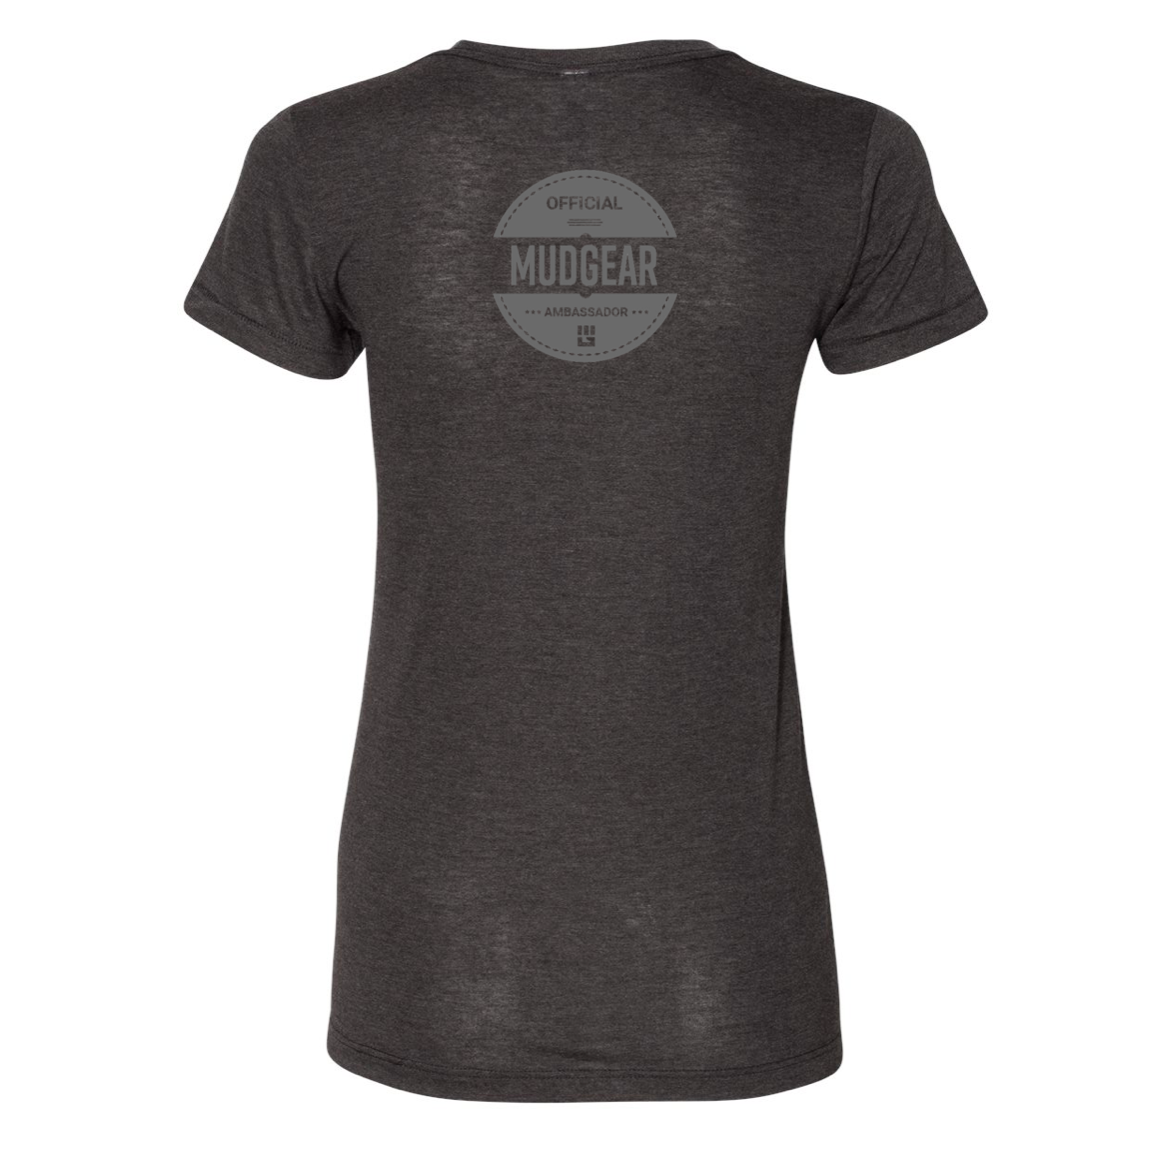 MudGear Ambassador Shirt Pre-Order